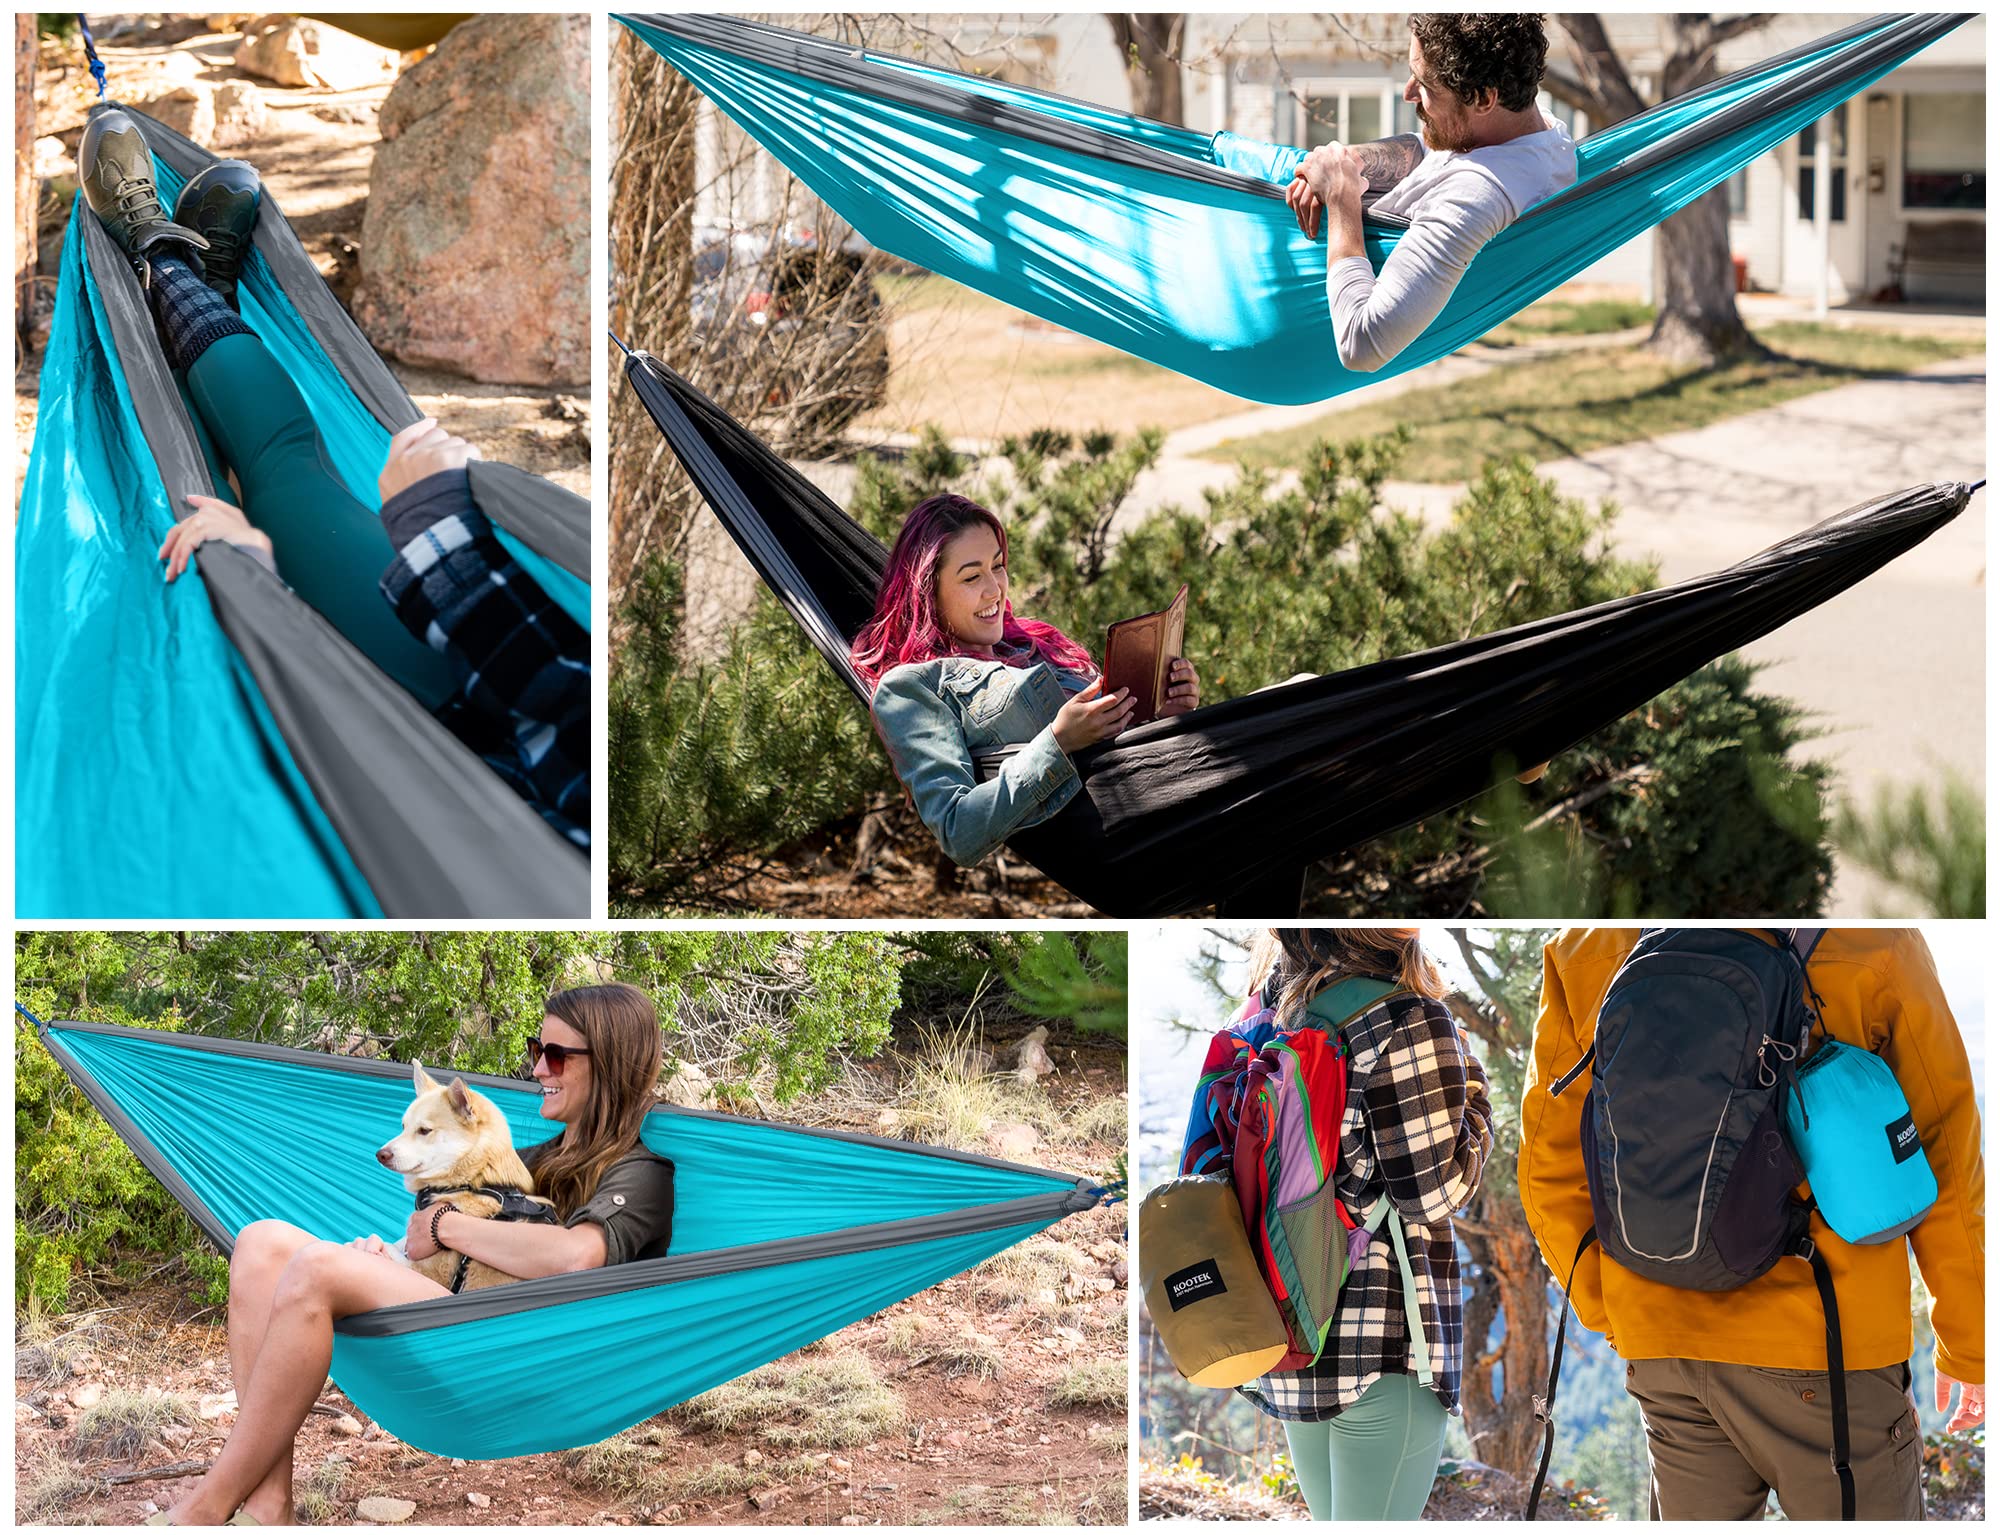 Portable Hammock Camping Accessories Gear Outdoor Indoor Hanging